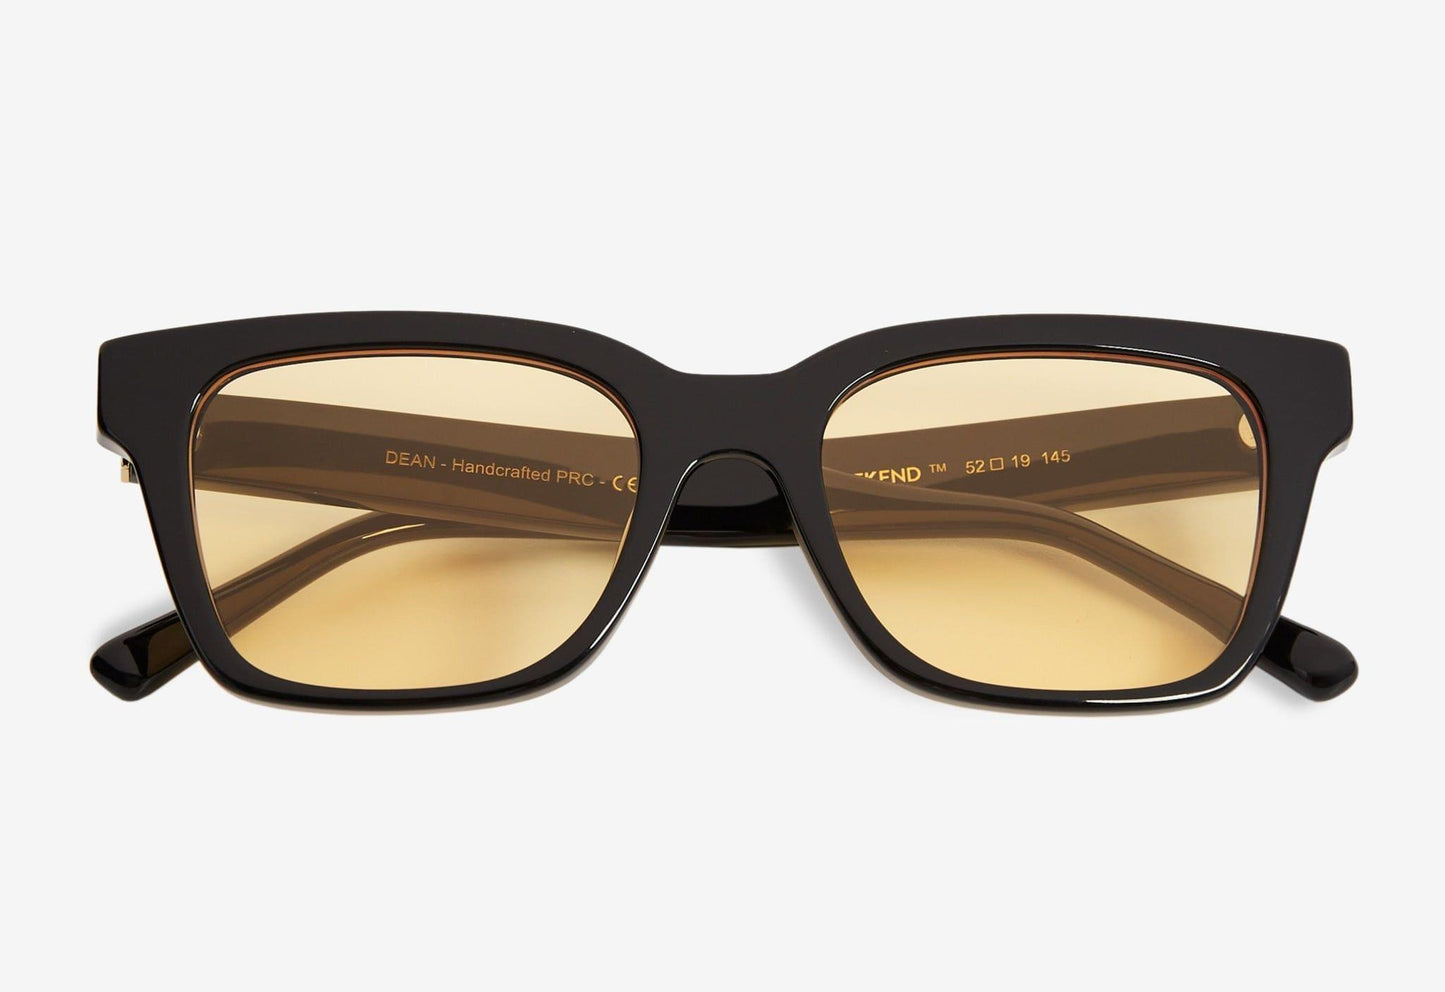 Dean, Rectangular sunglasses for men and women yellow lens UV400 protection